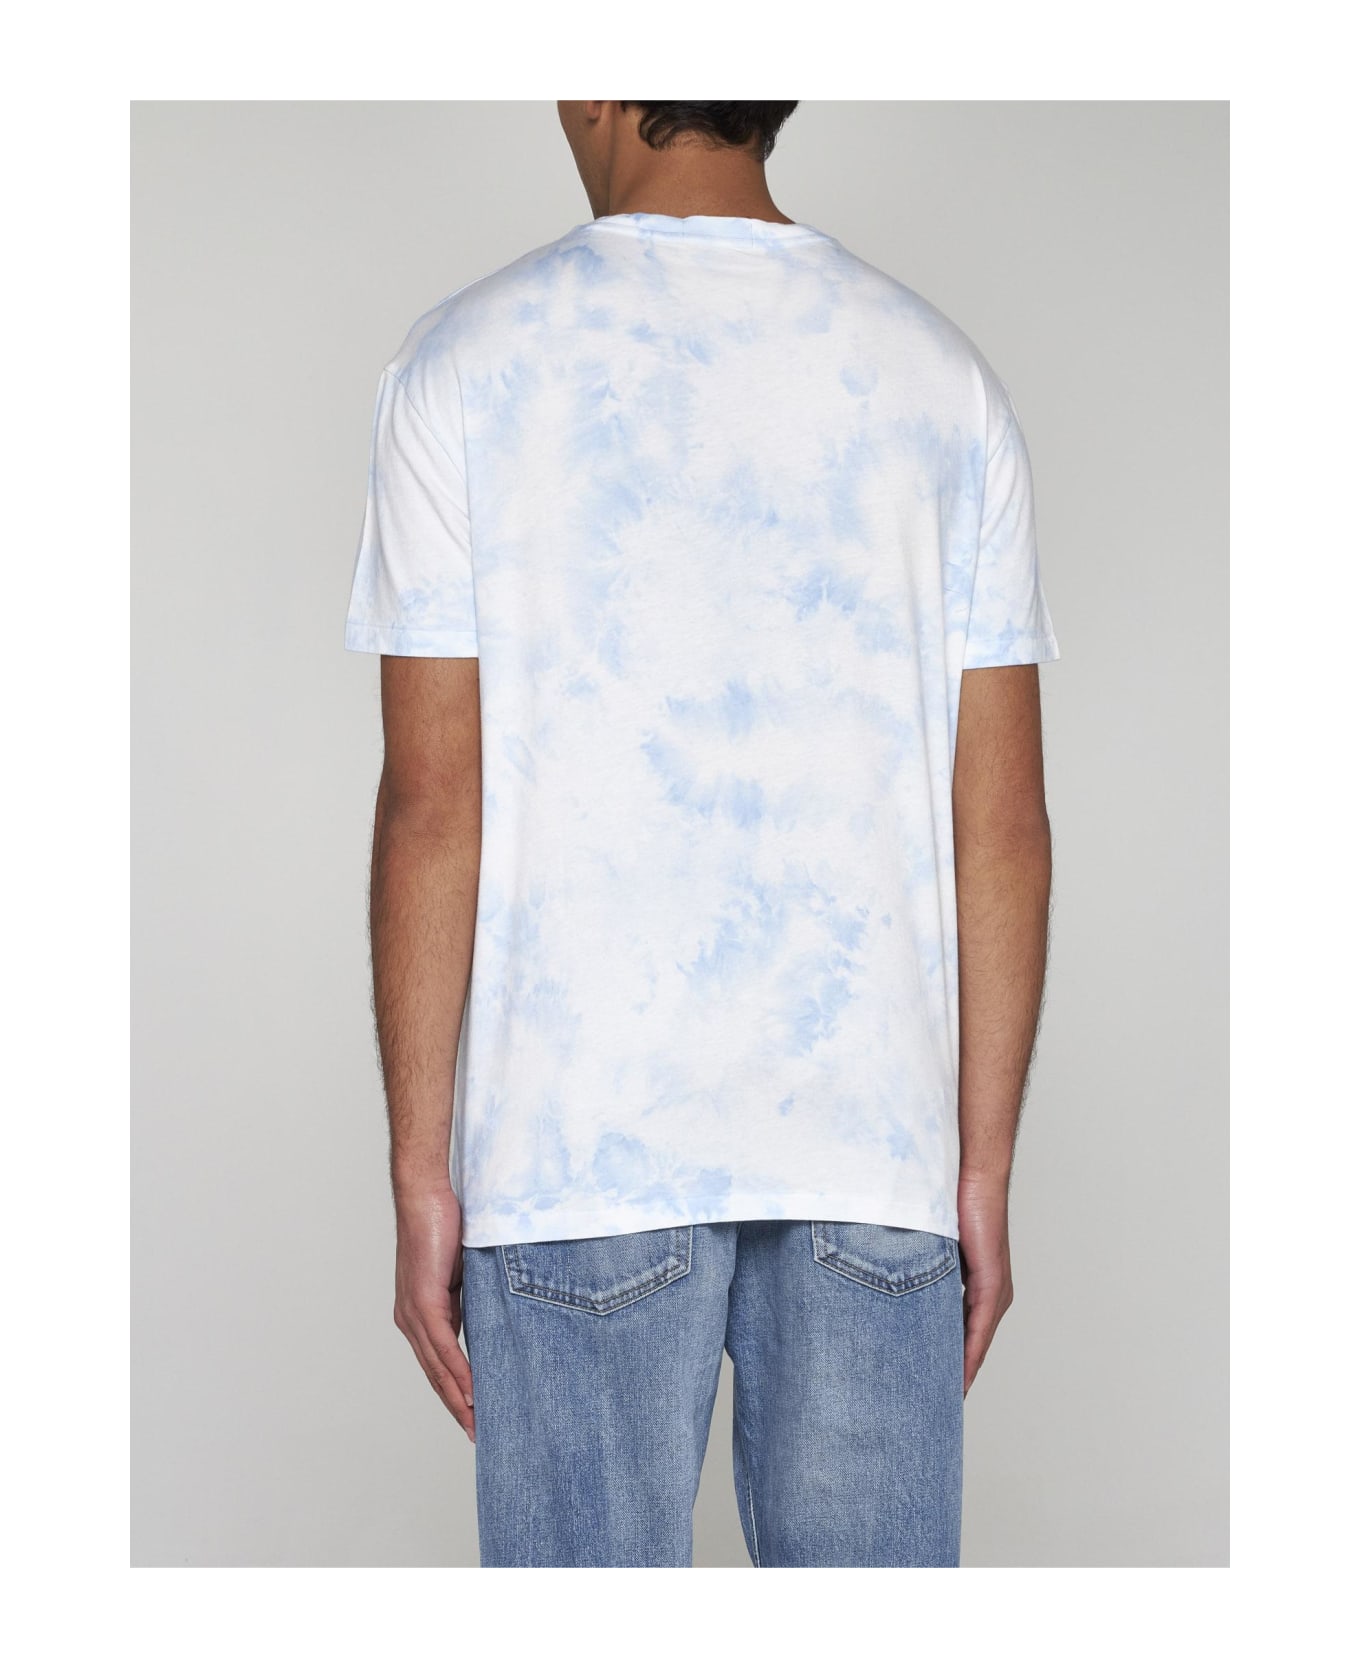 Polo Ralph Lauren Bear Cotton T-shirt - Bianco e Celeste